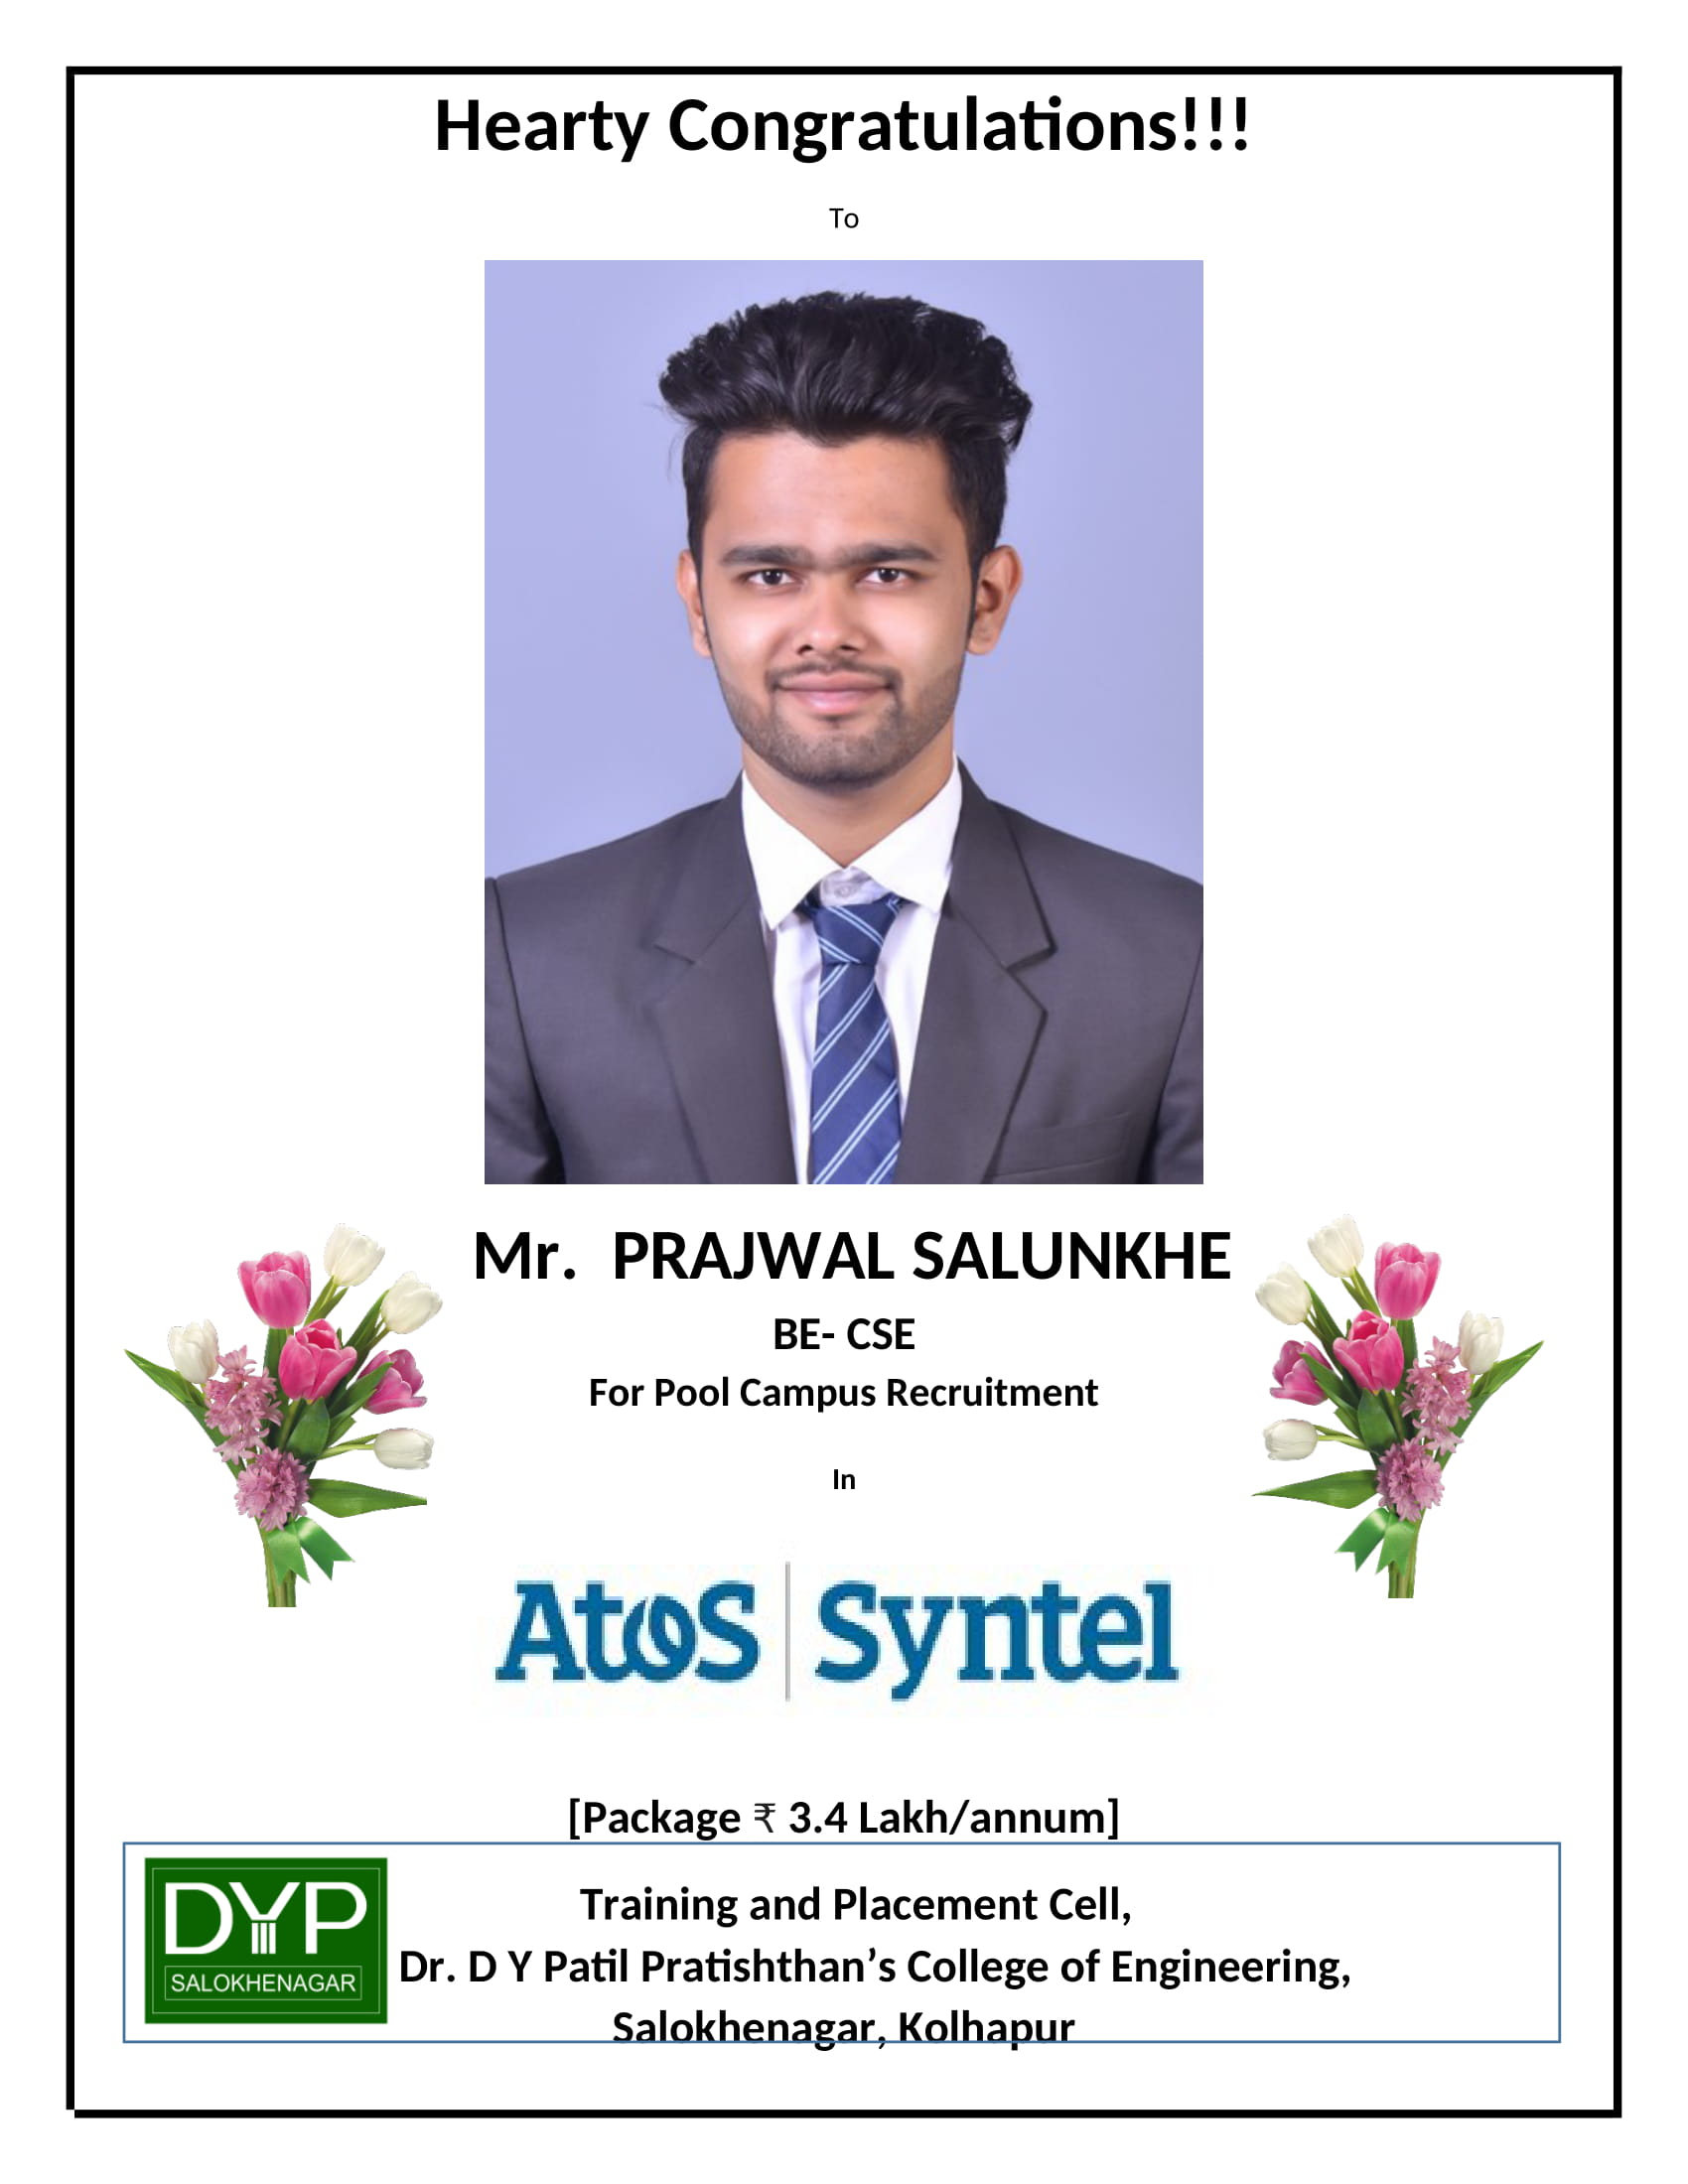 ATOS_SYNTEL_Prajwal-Pratik_Congrats-1